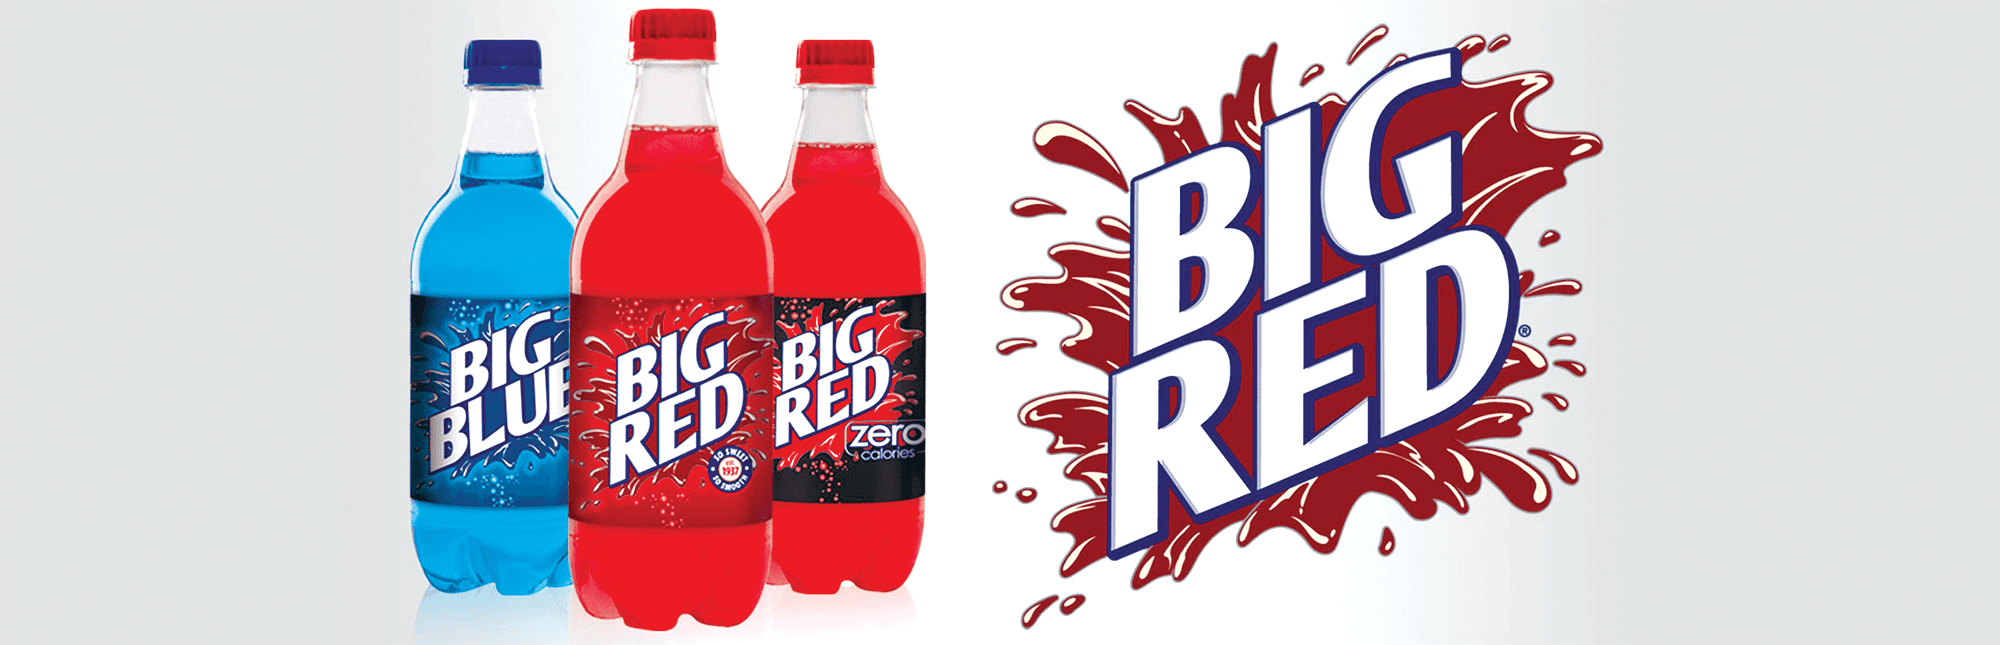 big red soda logo and soda bottles